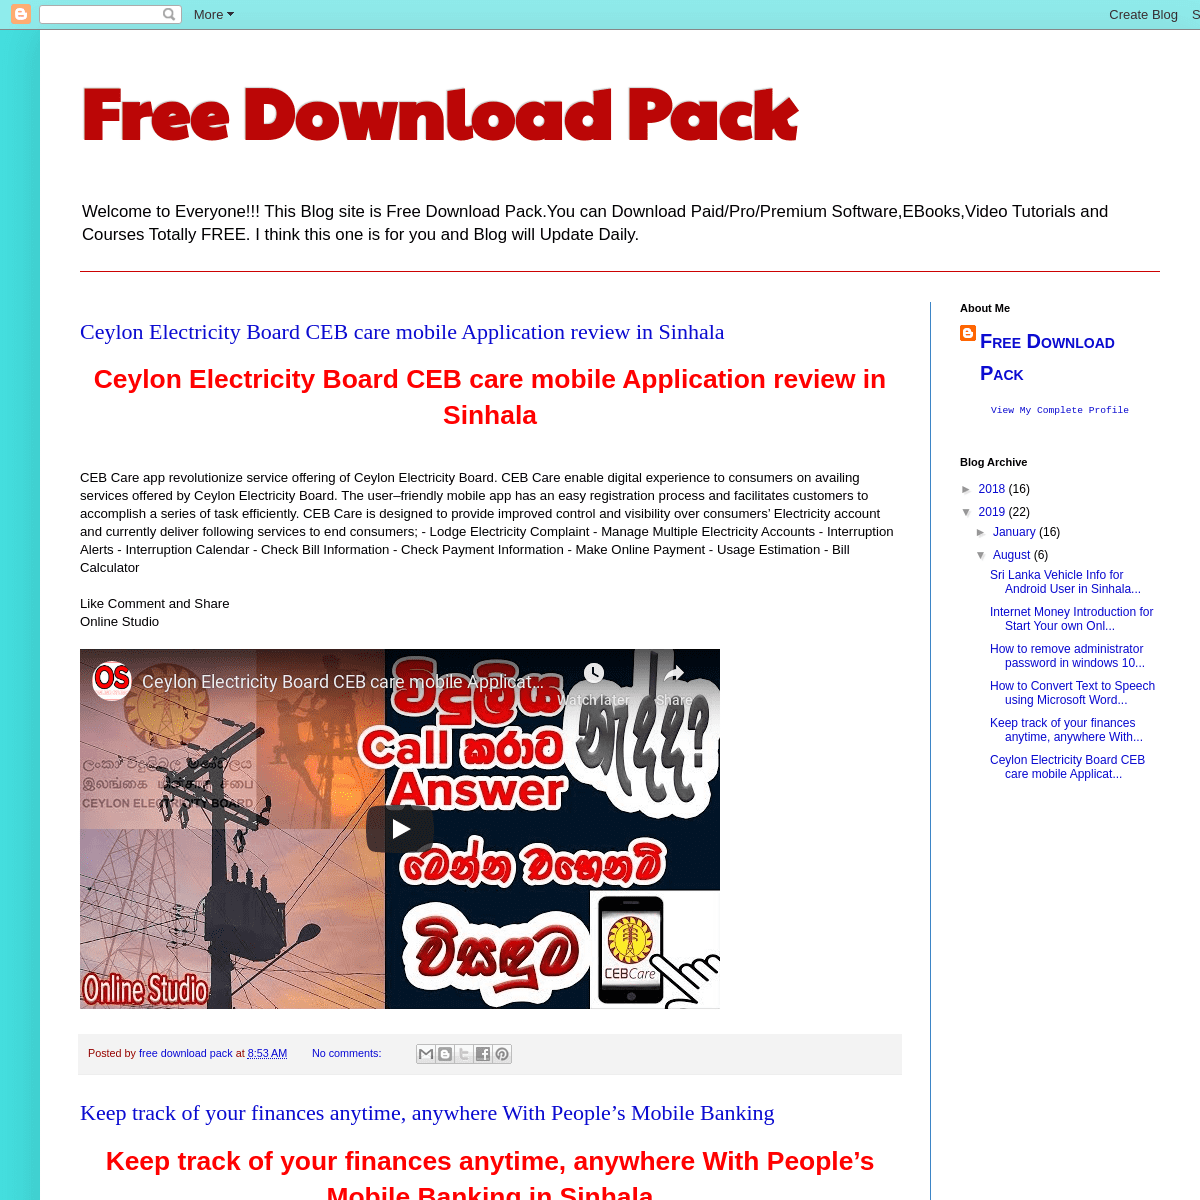 A complete backup of freedownloadpack.blogspot.com